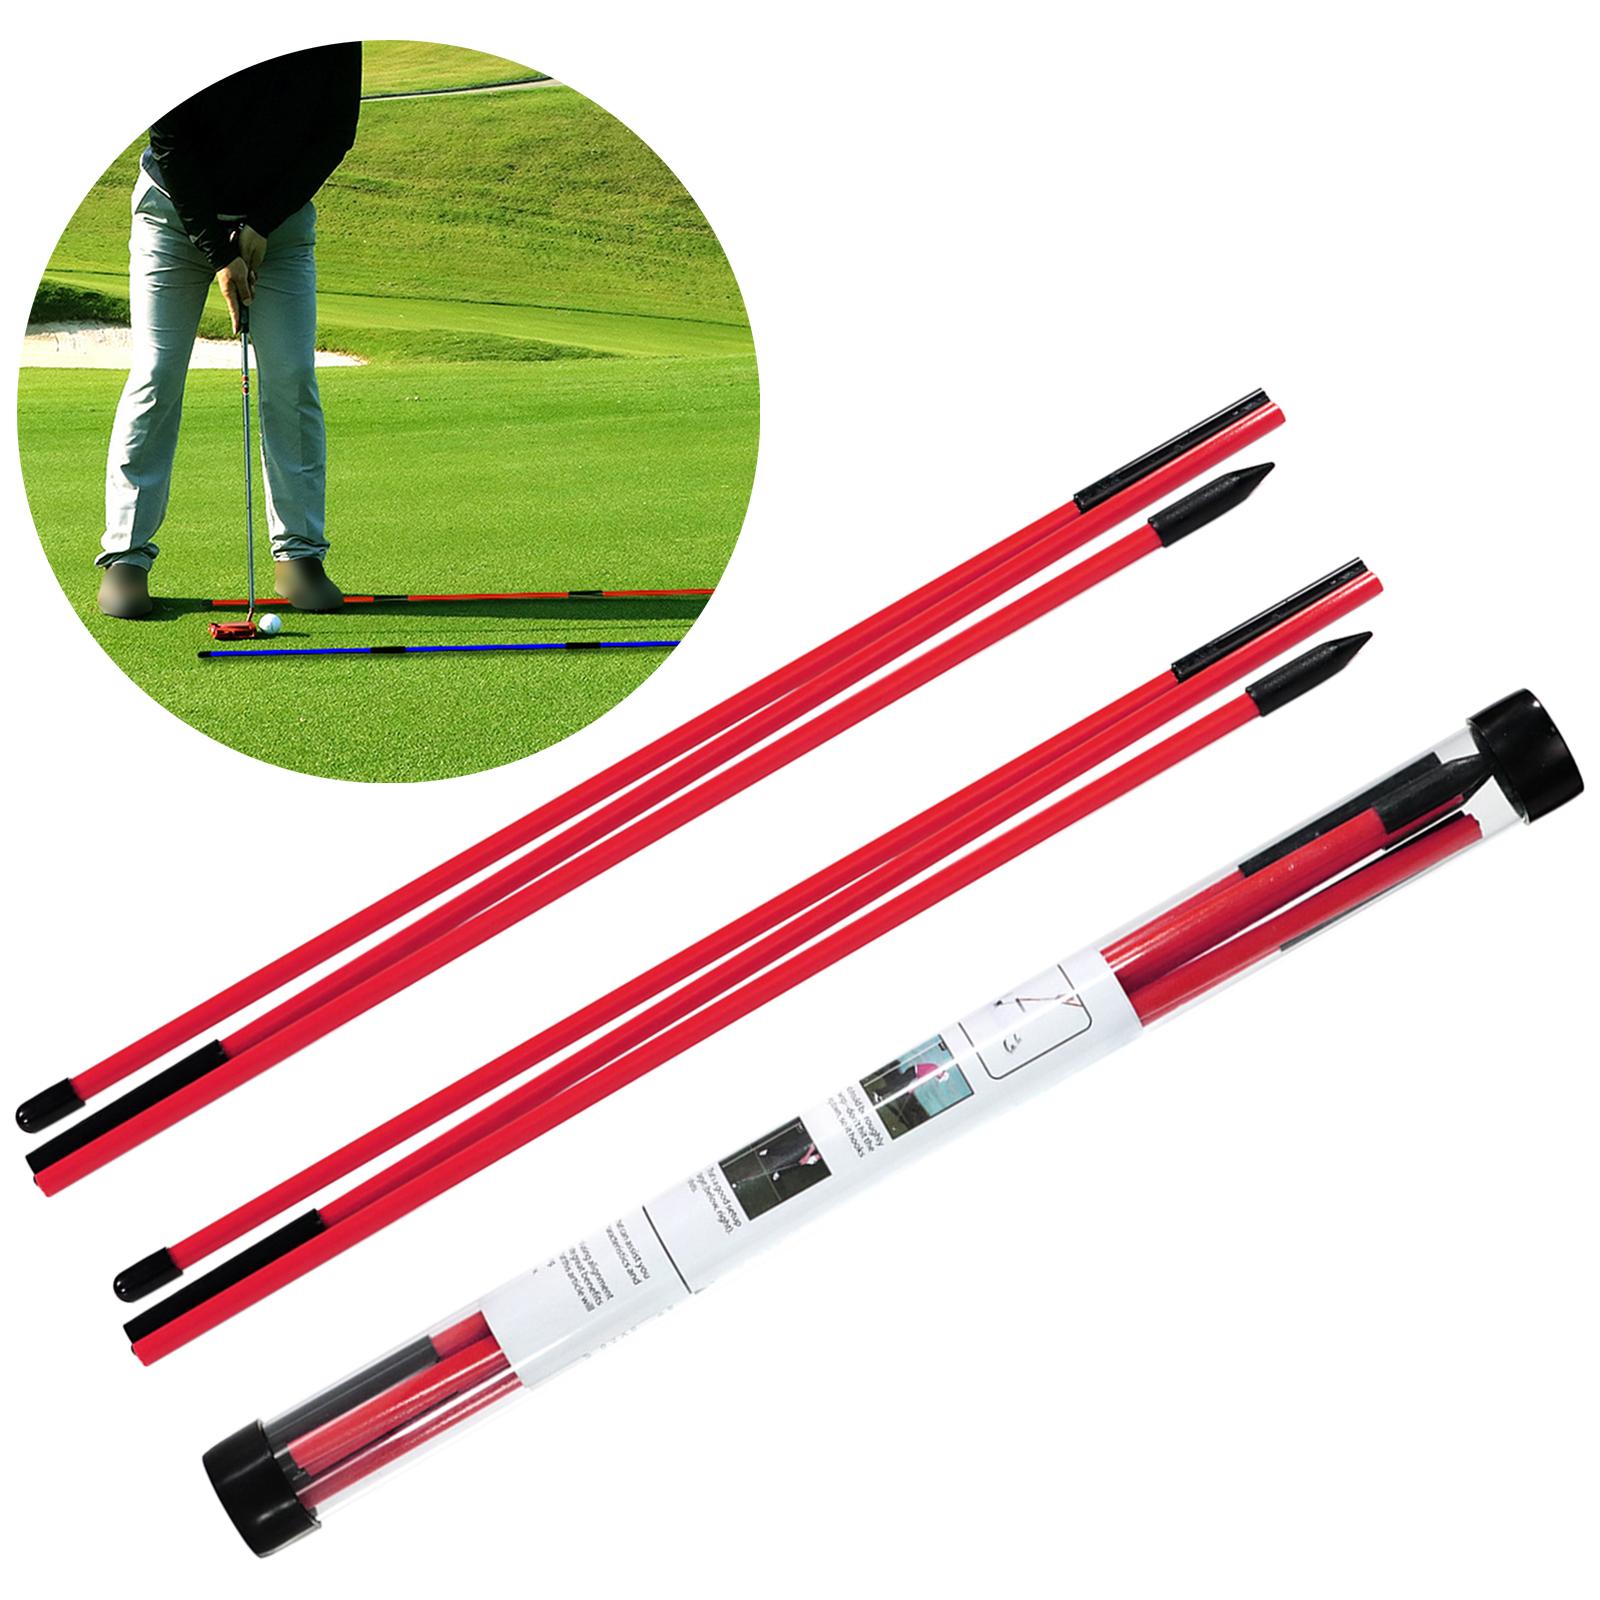 2Pack Golf Alignment Rods Golf Swing Trainer Sticks Golf Training Equipment Red